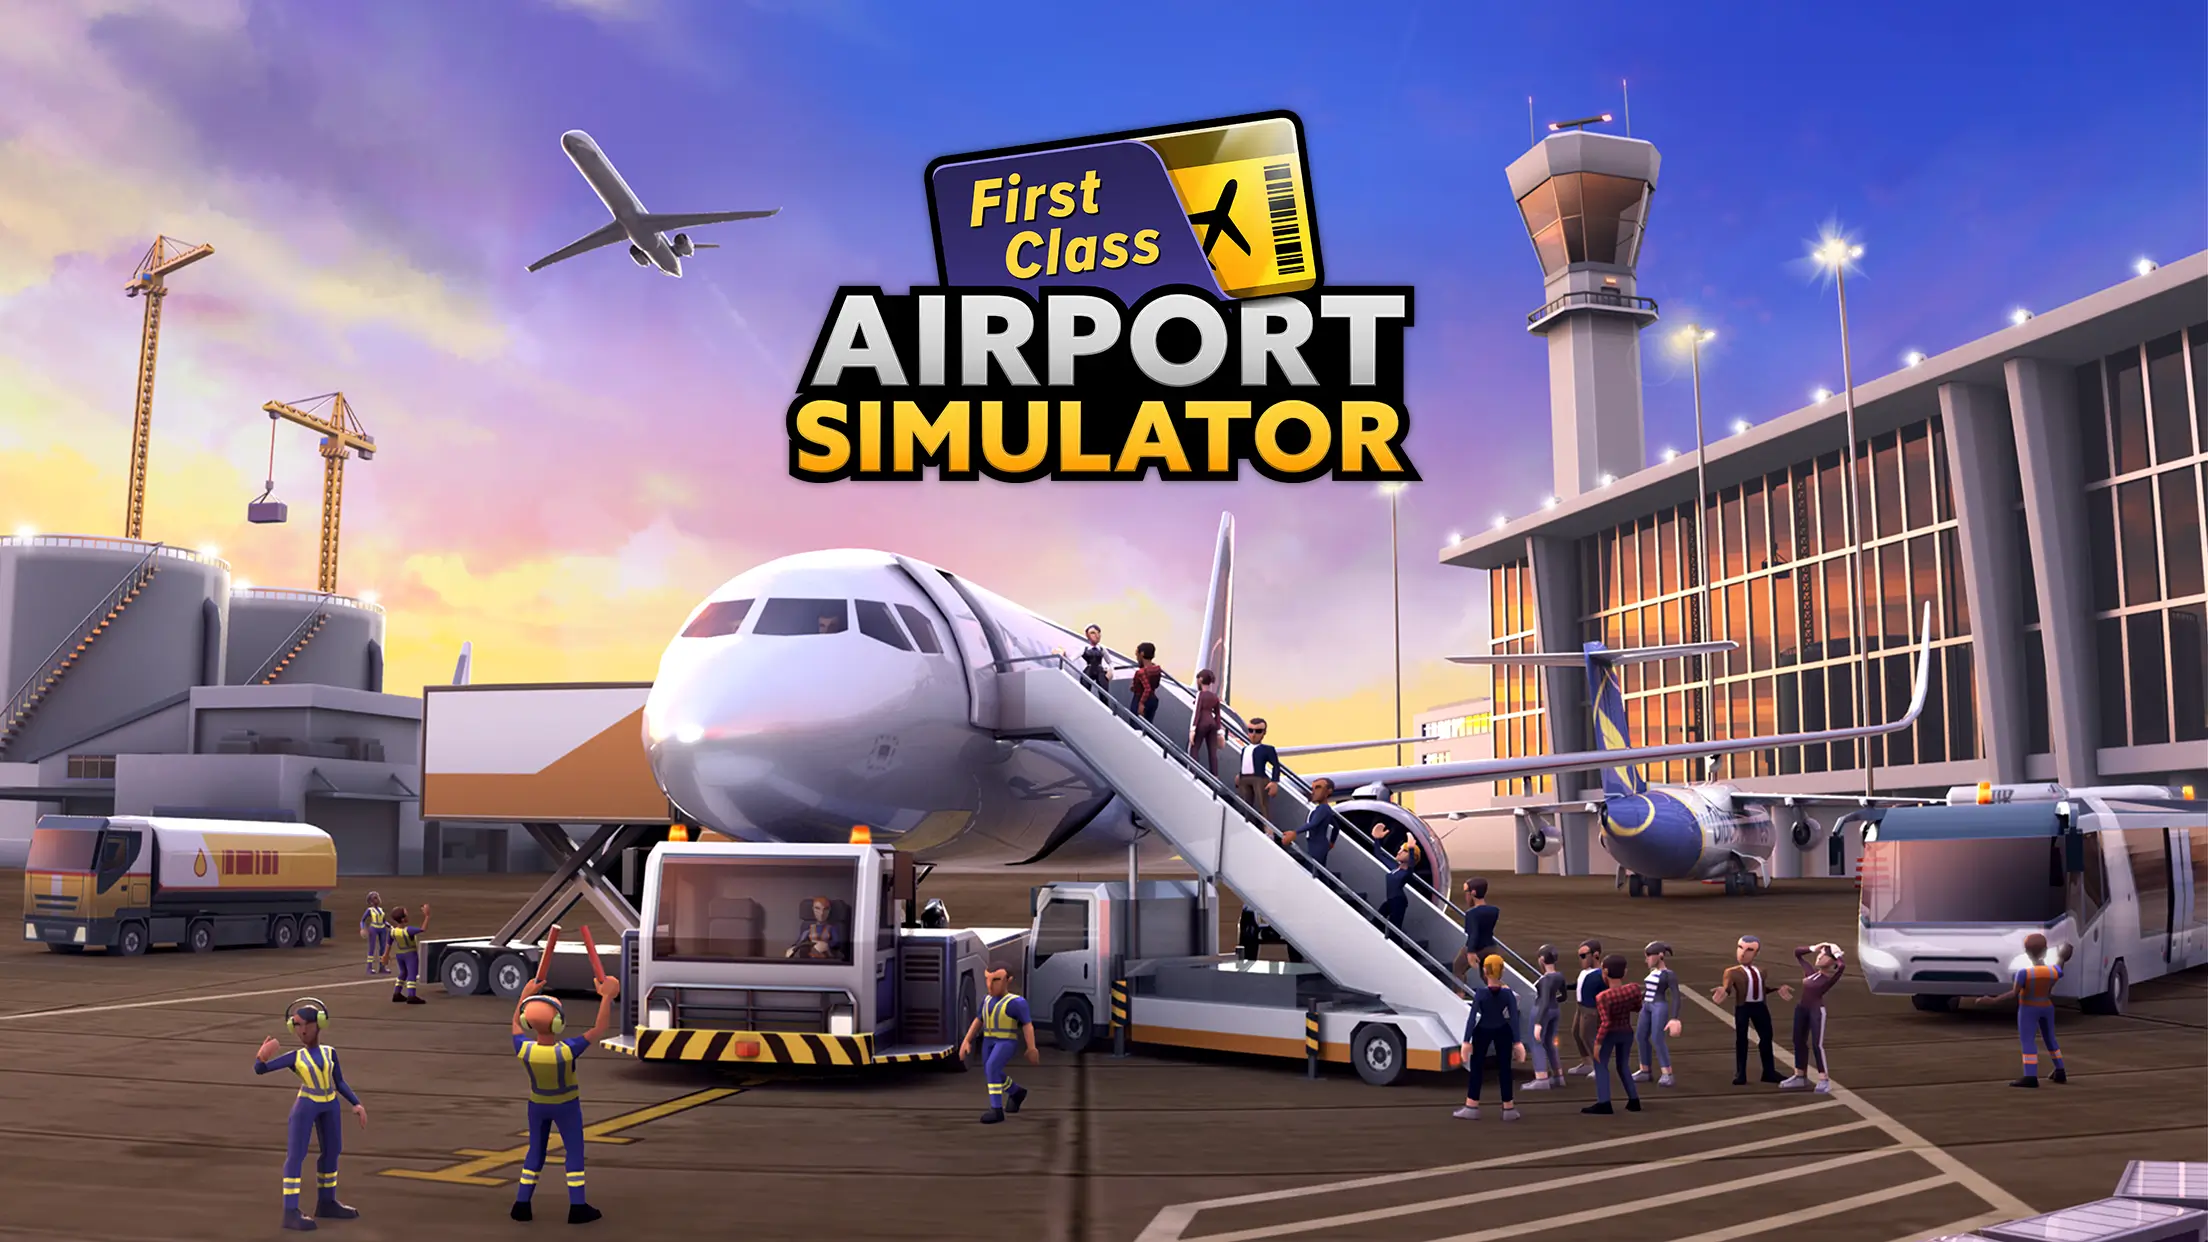 Airport simulator tycoon MOD APK